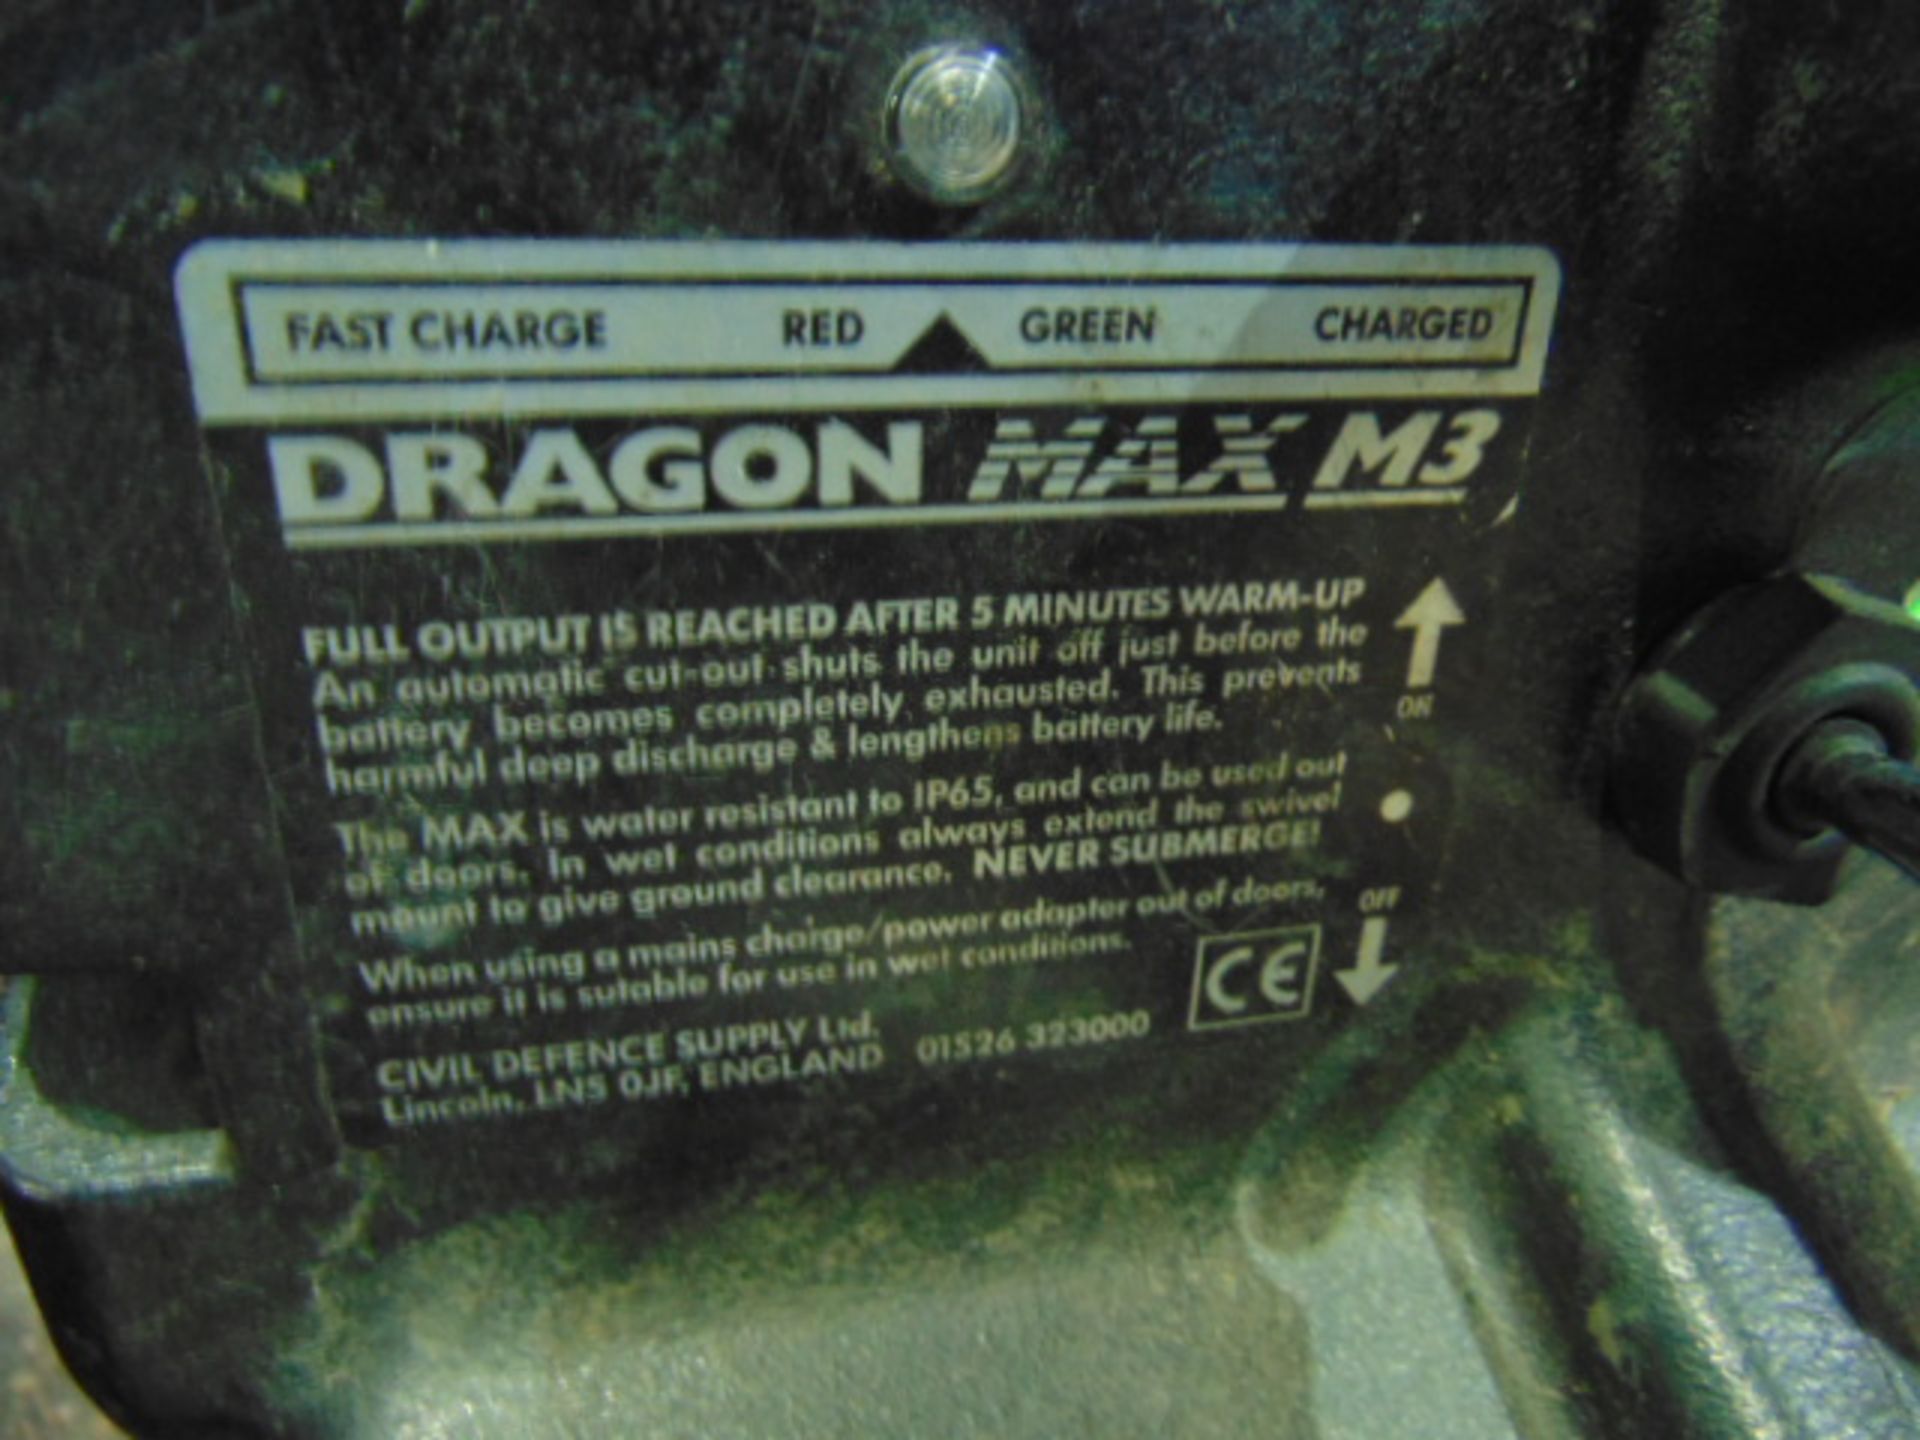 2 x Dragon Max M3 Portable Floodlight - Image 4 of 4